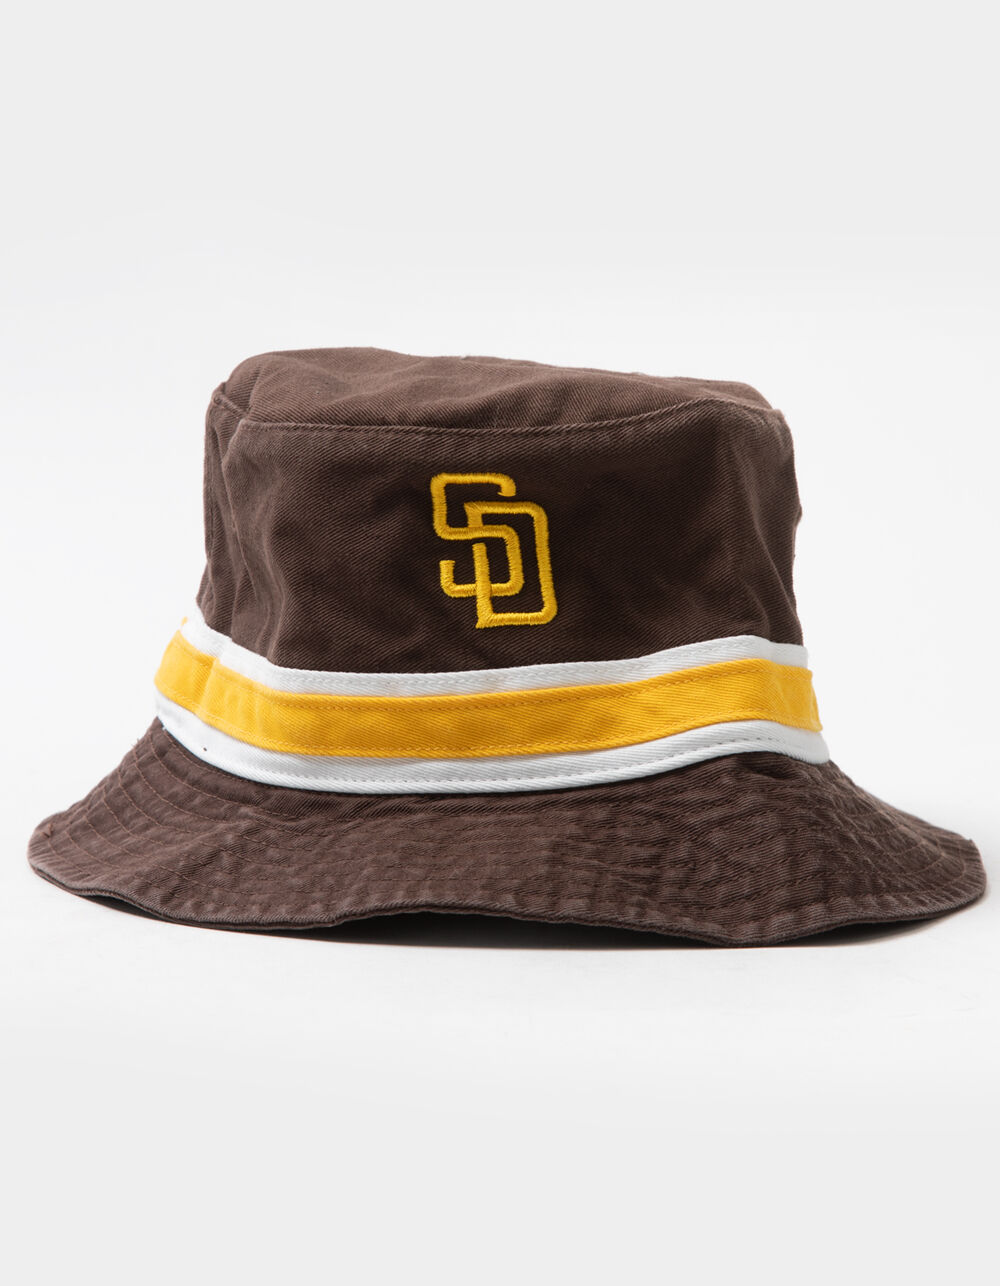 San Diego Padres beach hat giveaway features grain beetles.